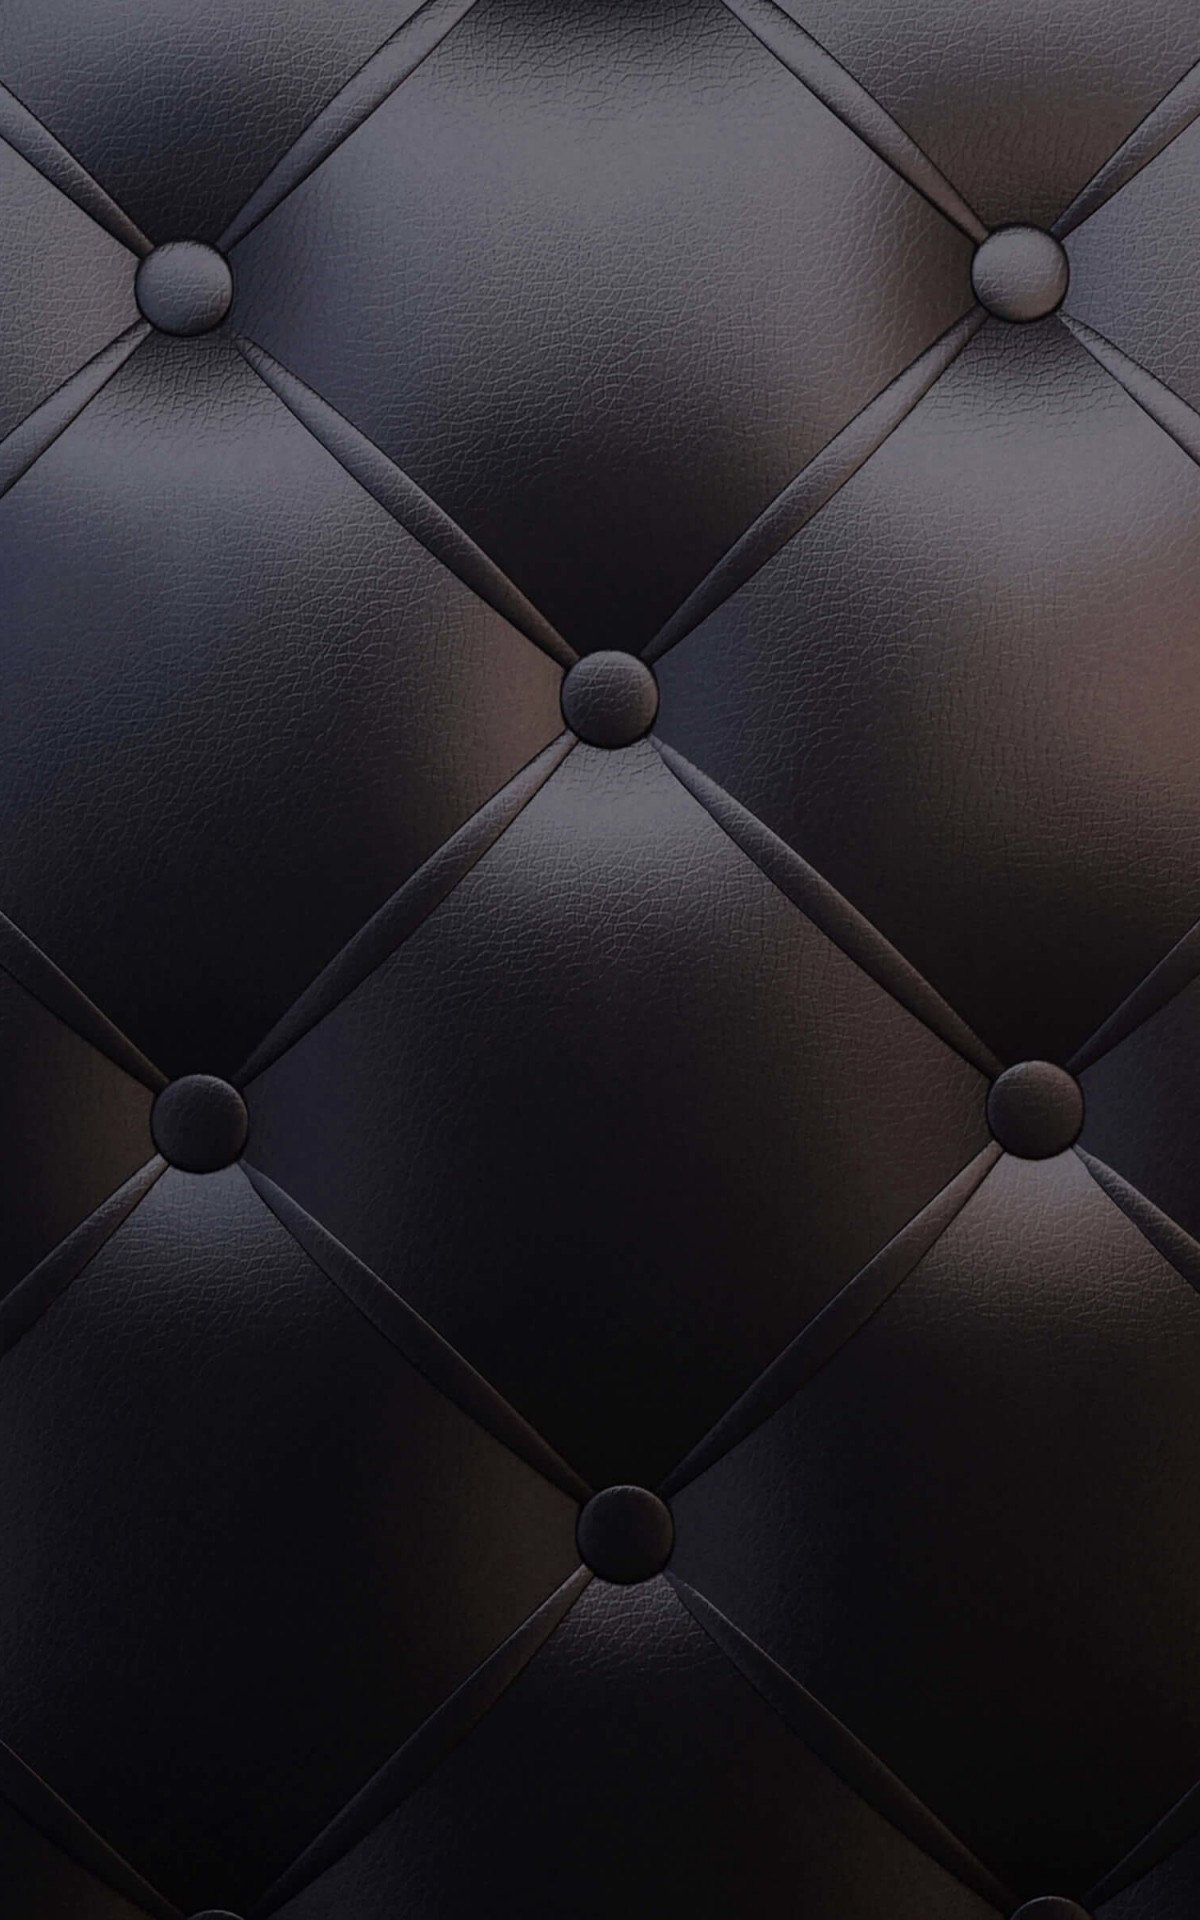 Black Leather Vintage Sofa Wallpaper for Amazon Kindle Fire HDX